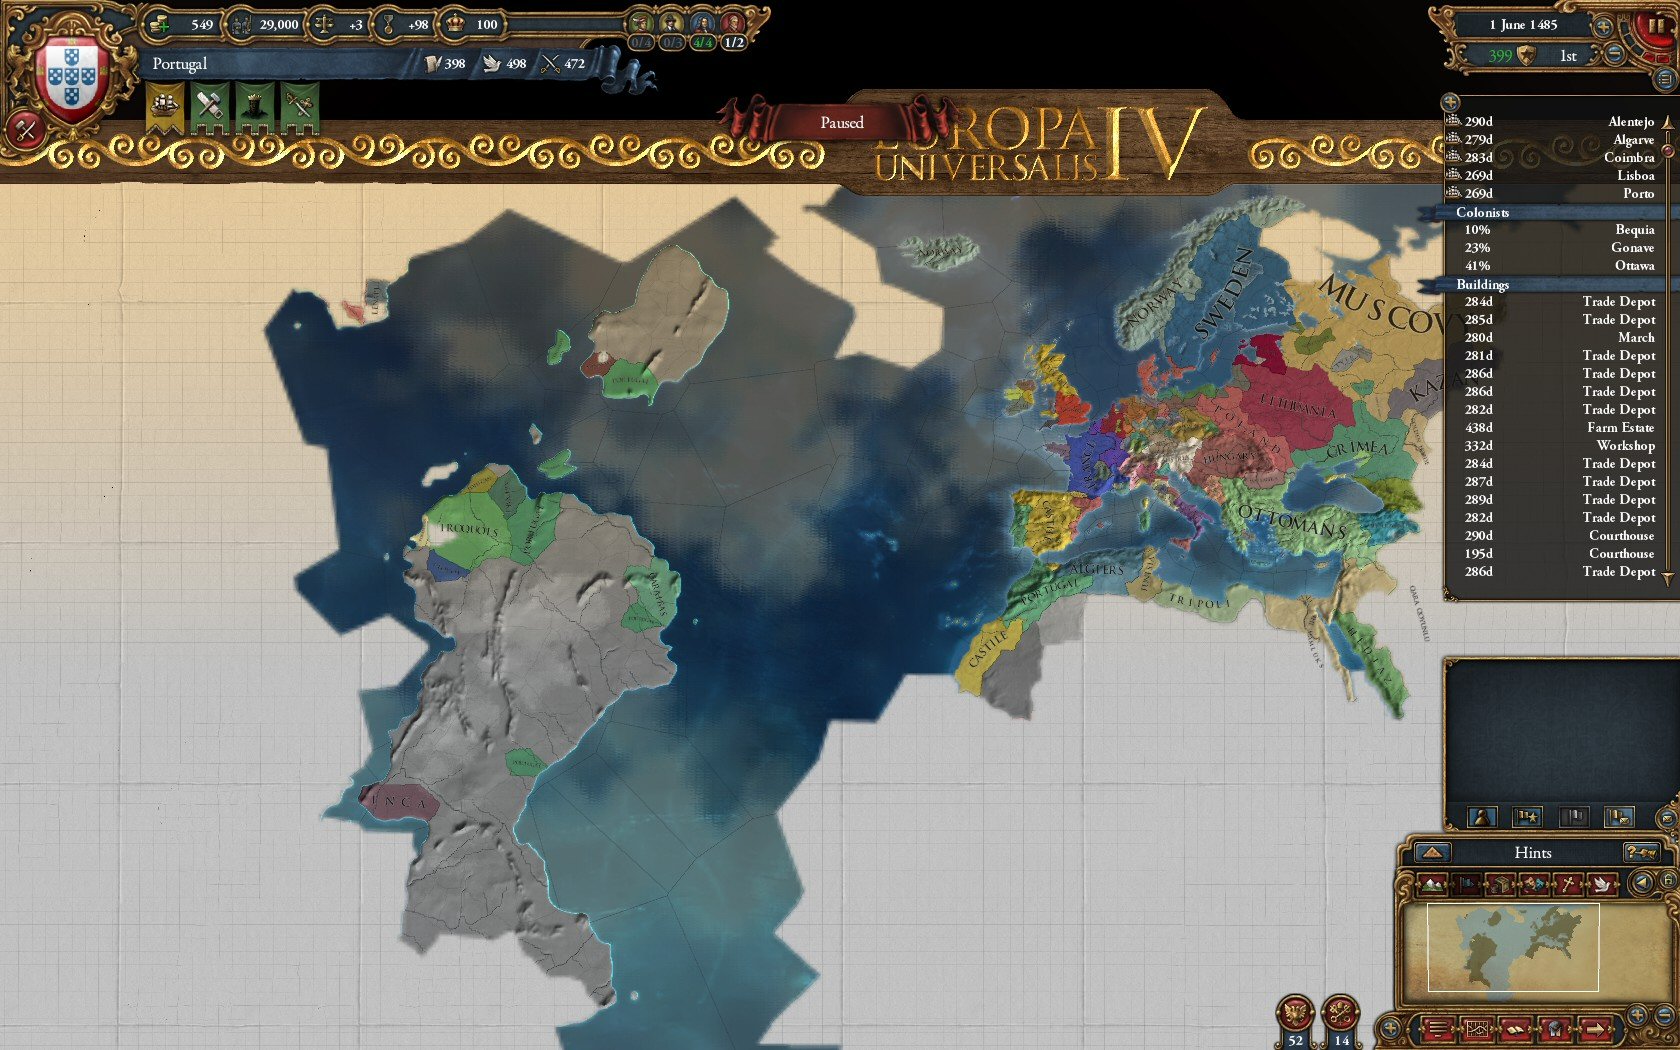 europa universalis 4 world conquest